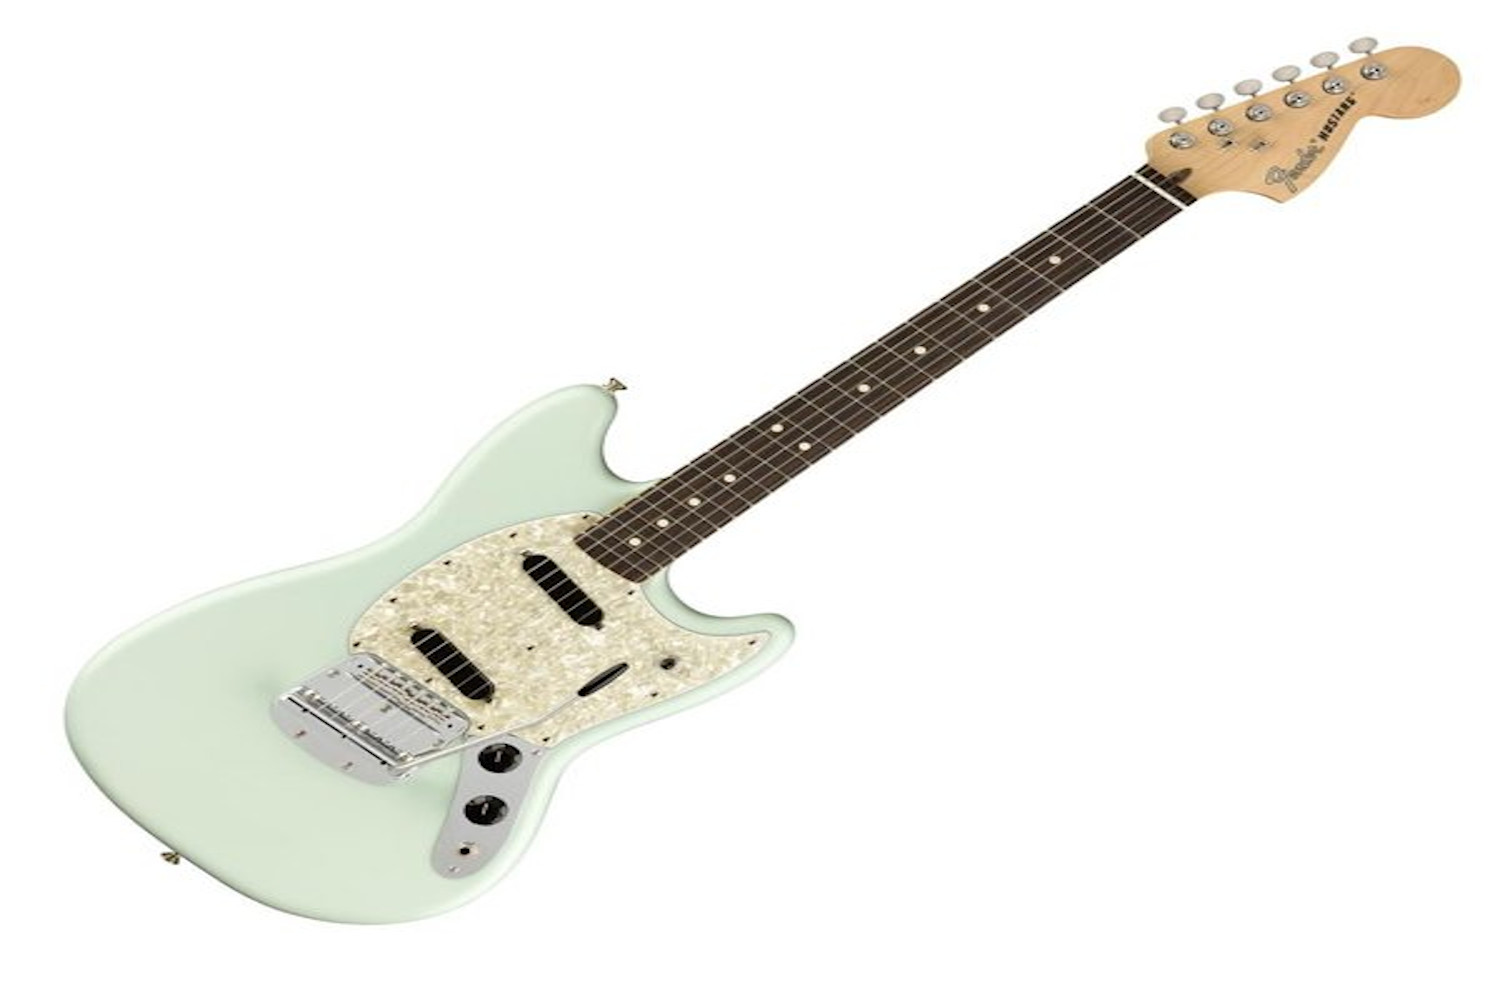 CHARも使用のギター【Mustang】をご紹介 – Tokyo Guitar Press